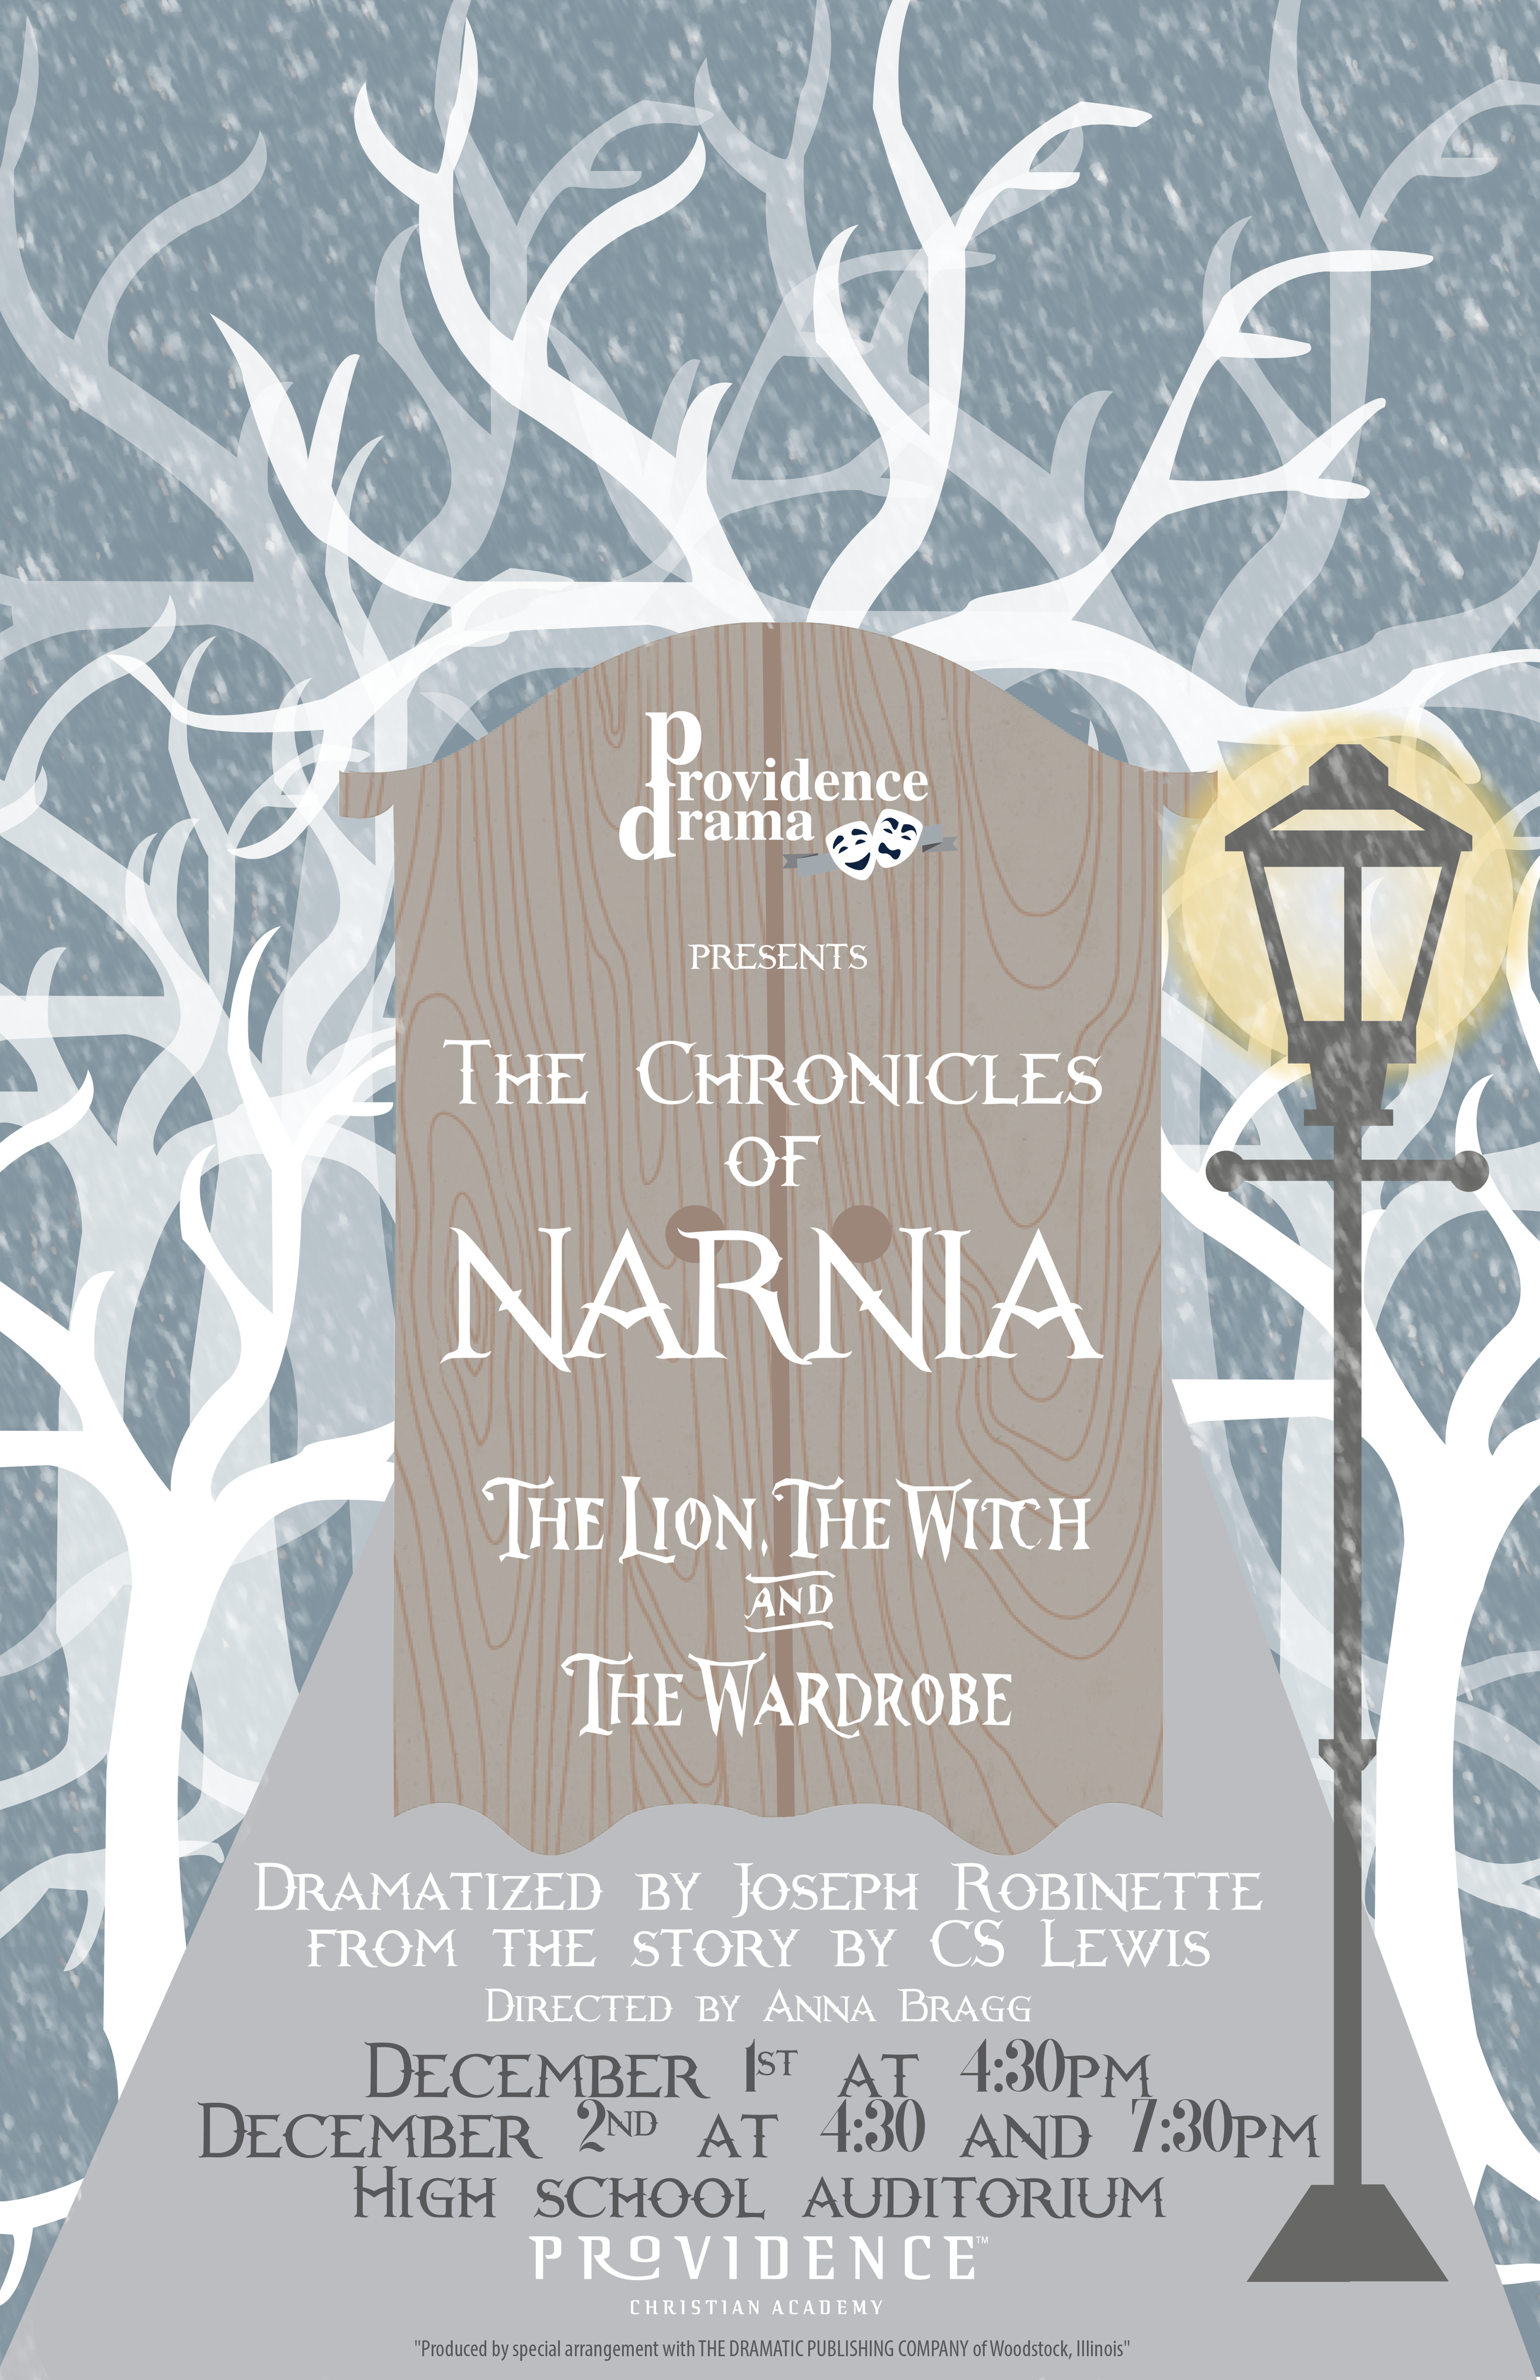 NarniaPoster.png